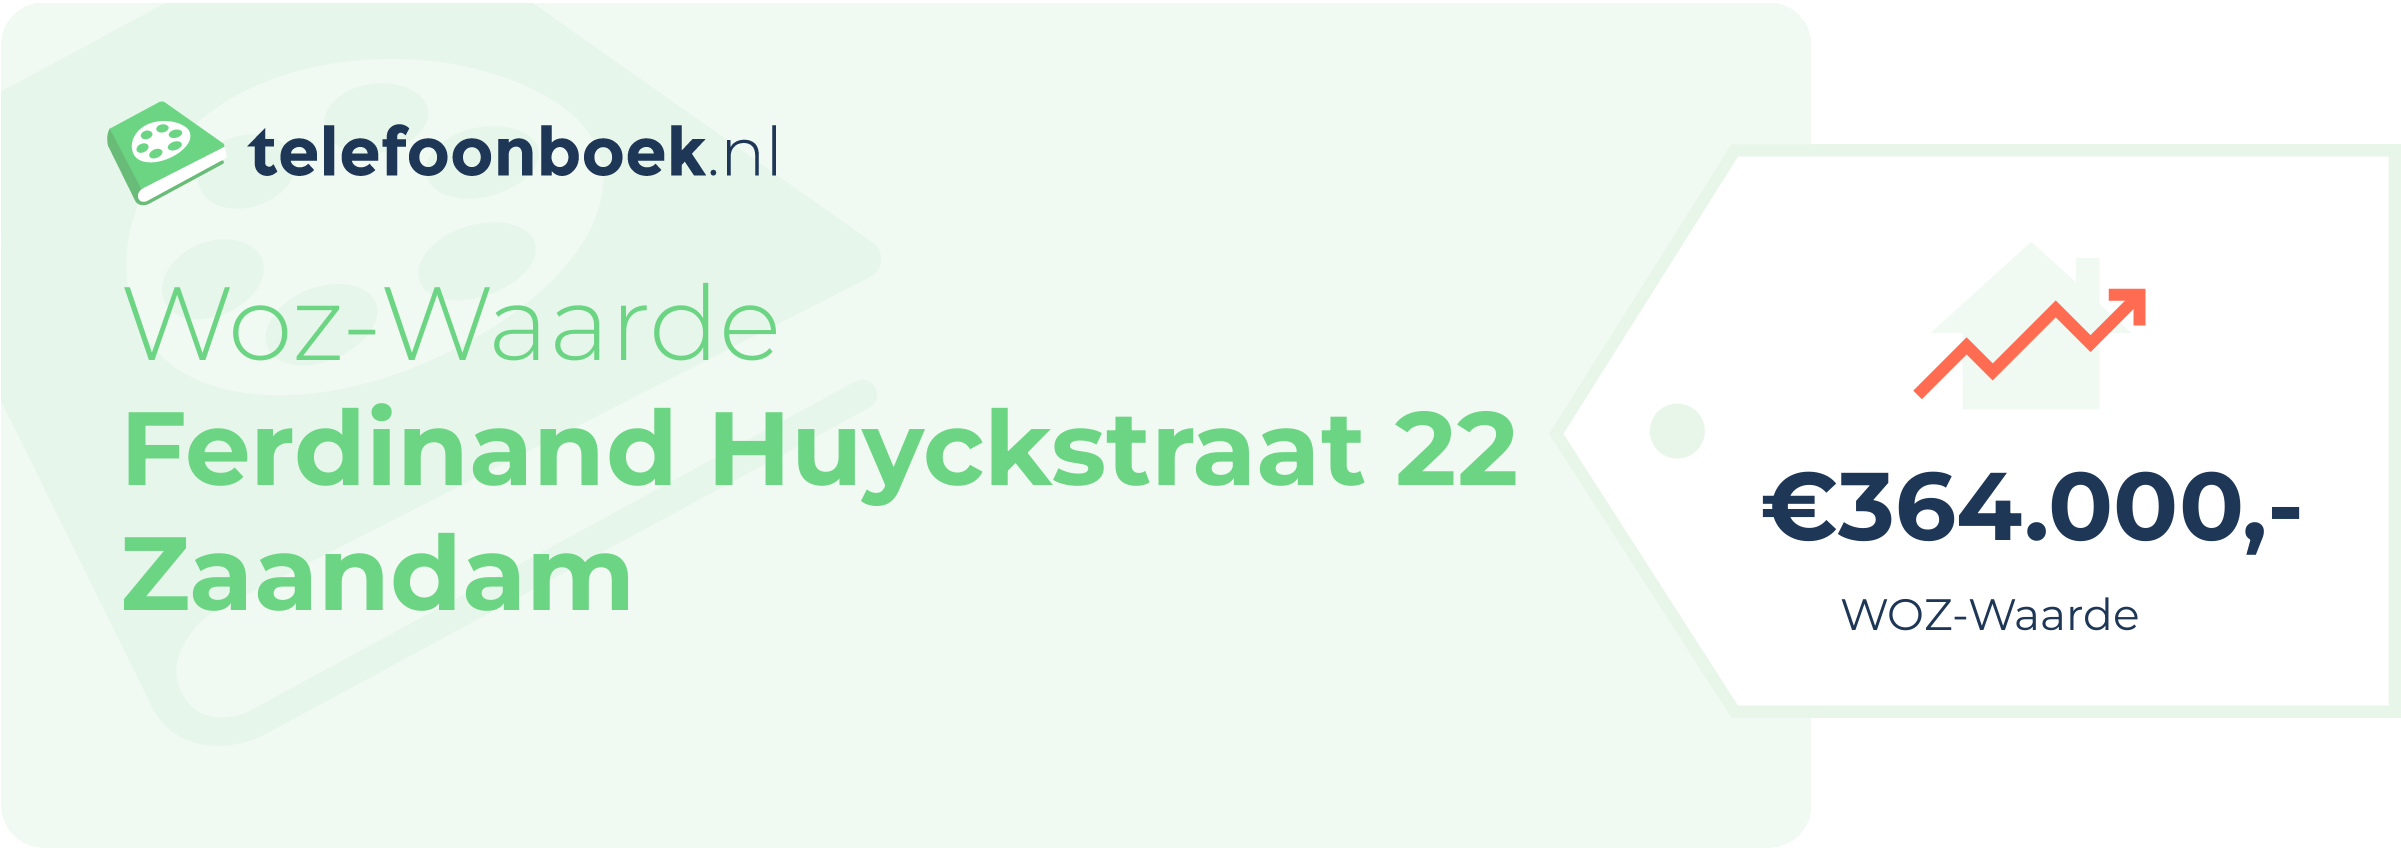 WOZ-waarde Ferdinand Huyckstraat 22 Zaandam